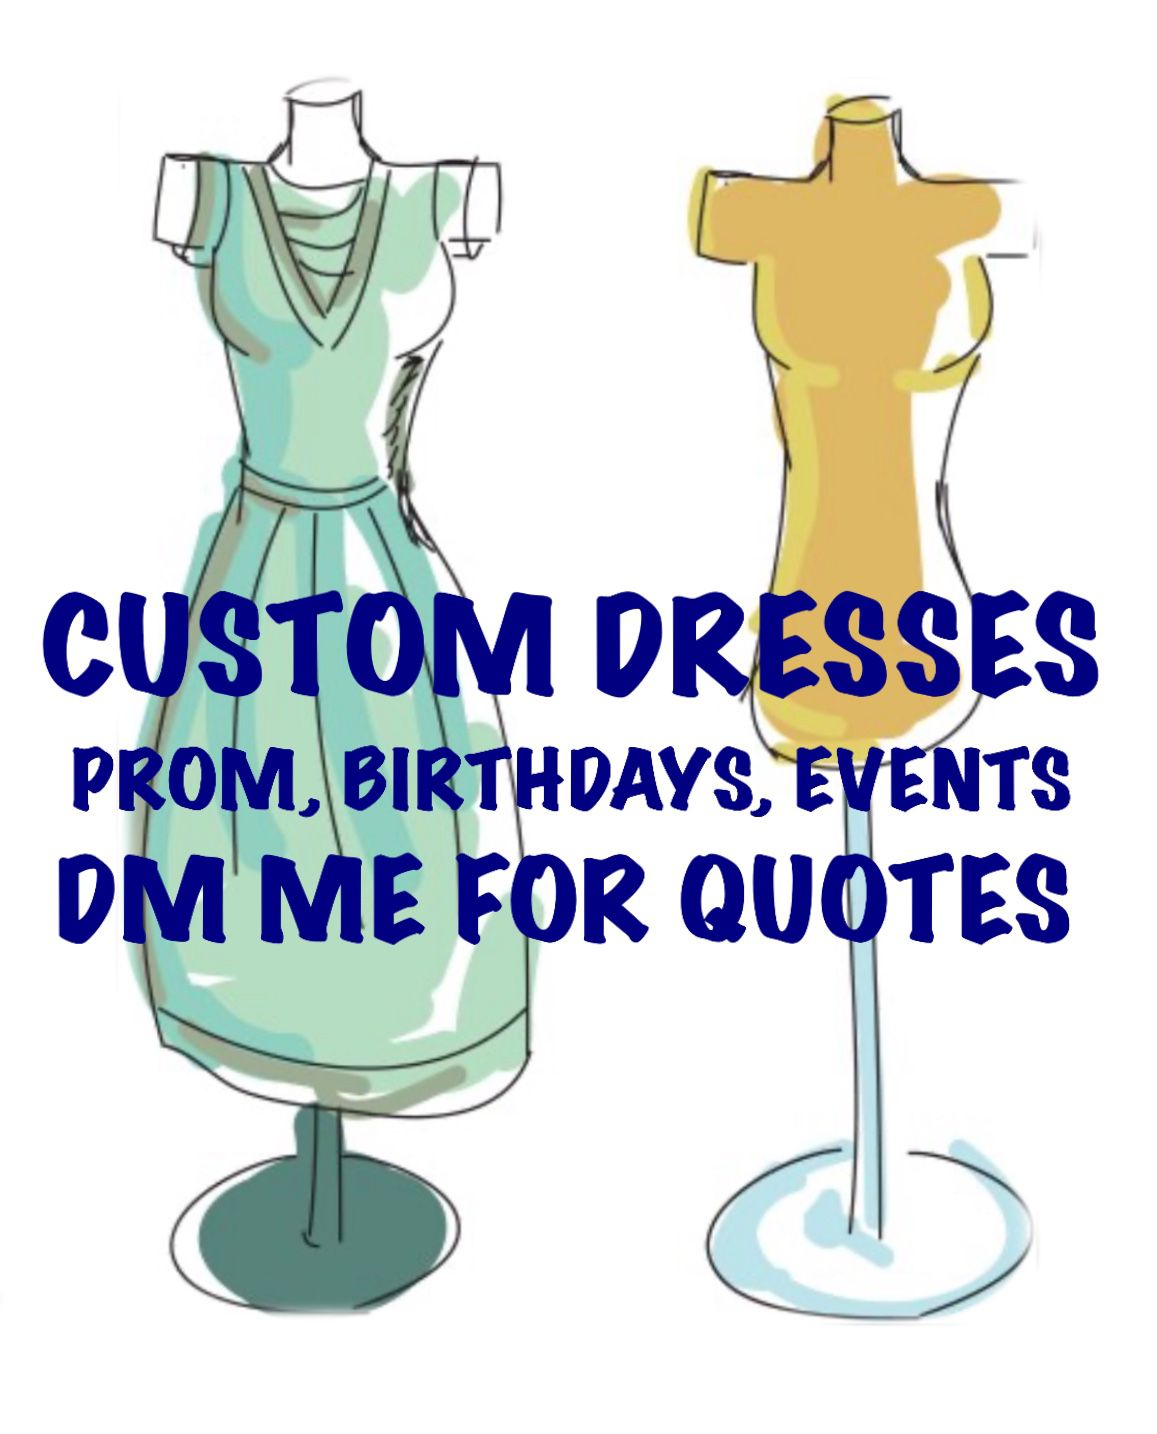 custom dresses